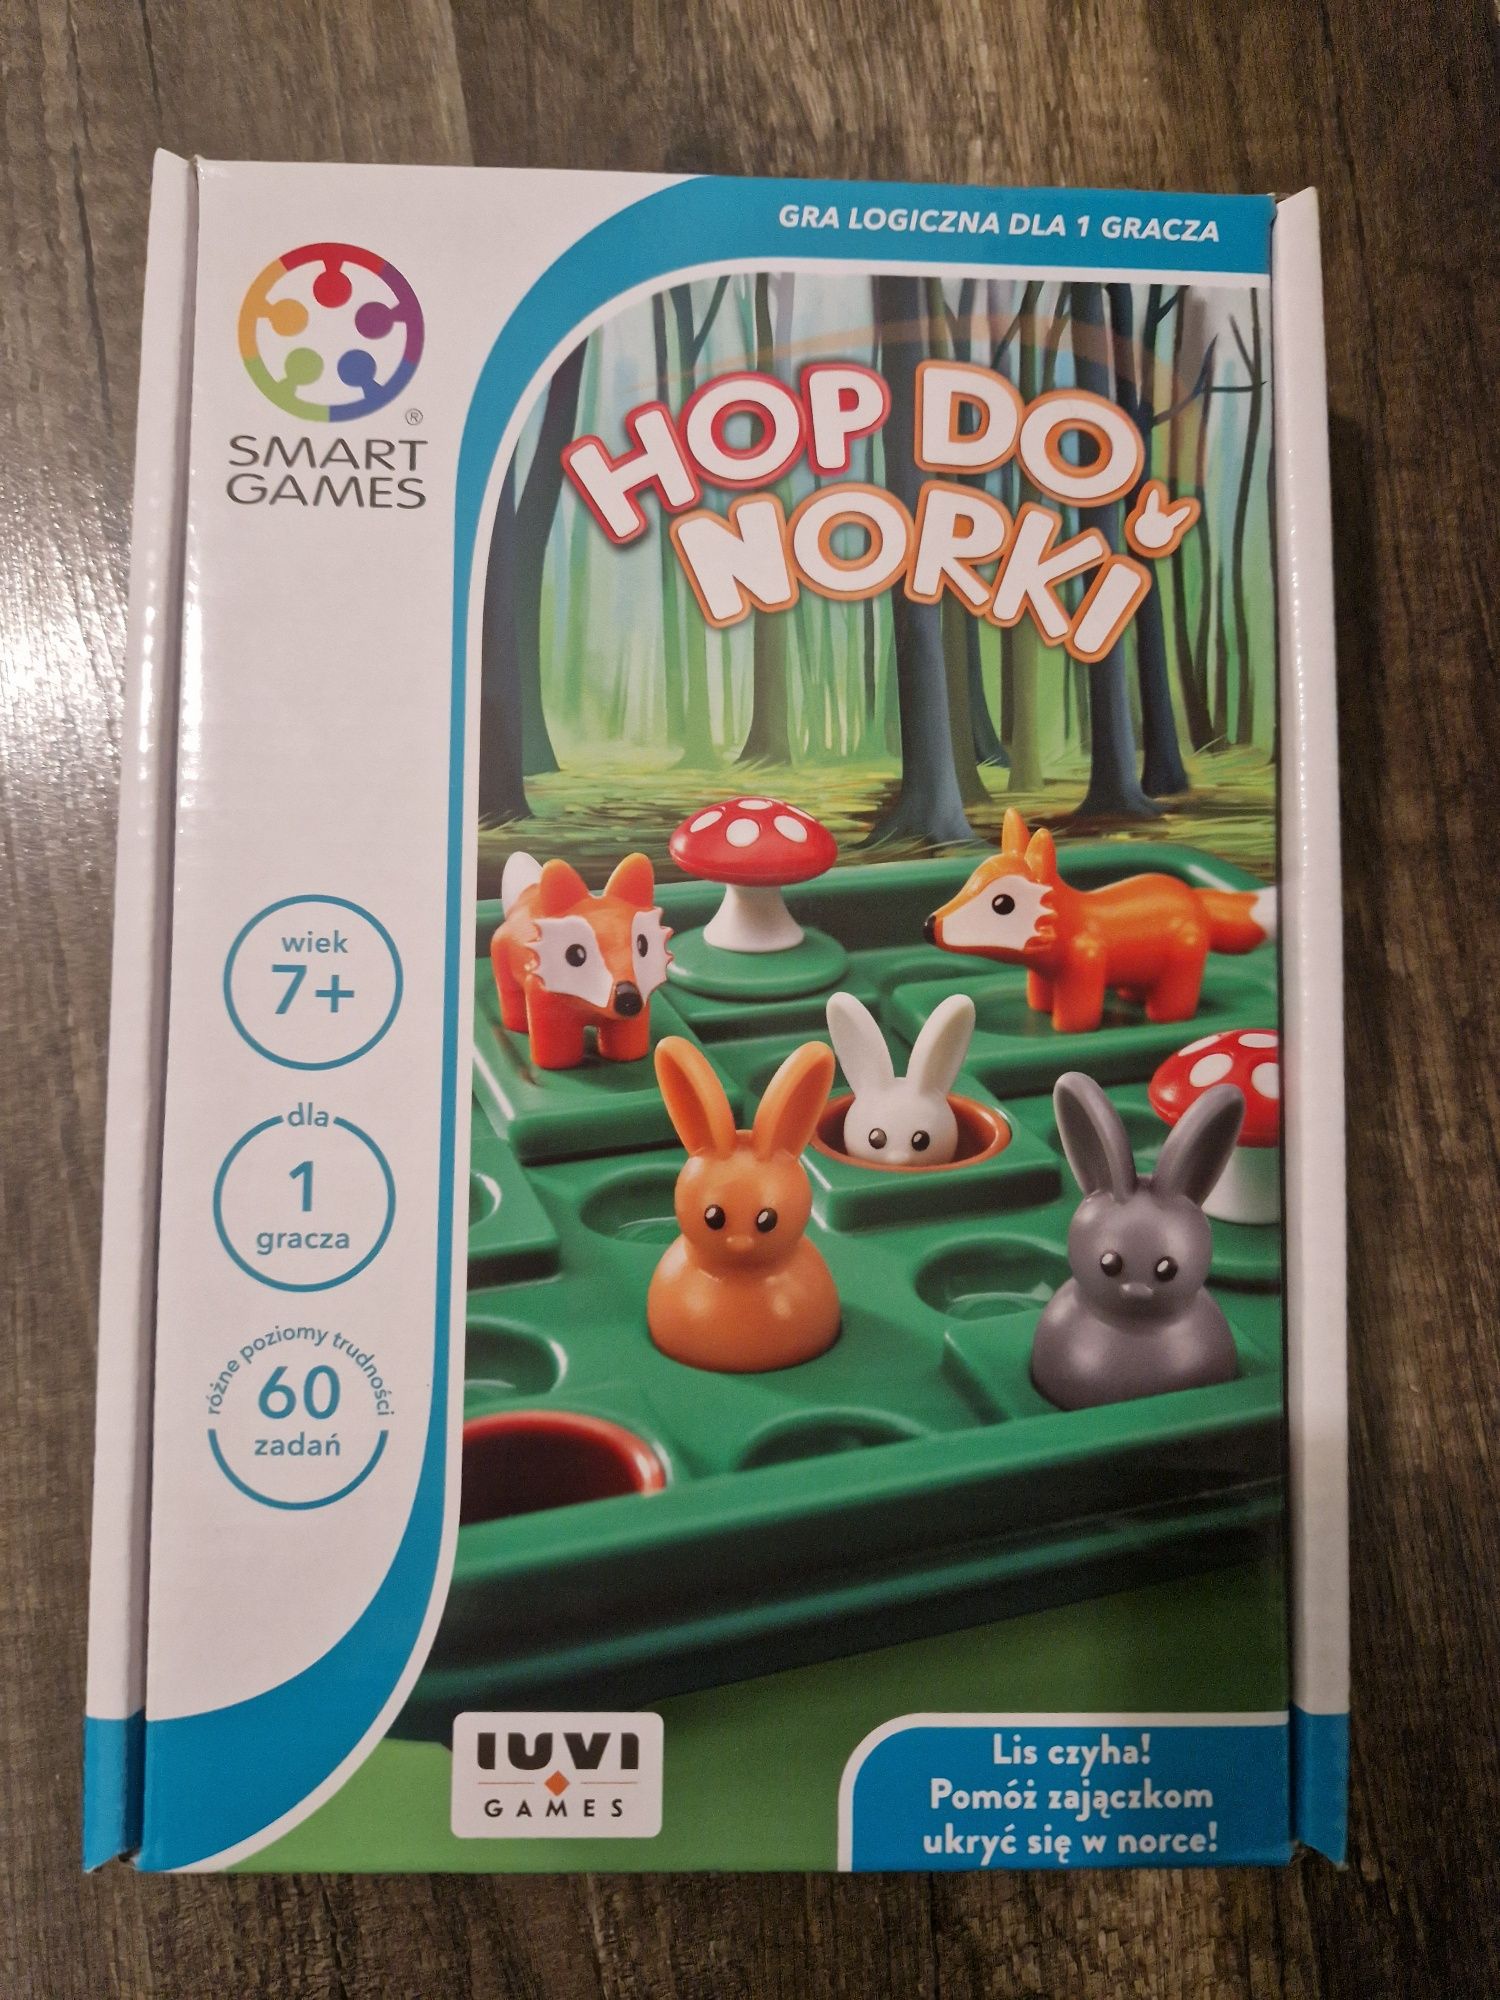 NOWA gra Hop do norki Smart Games